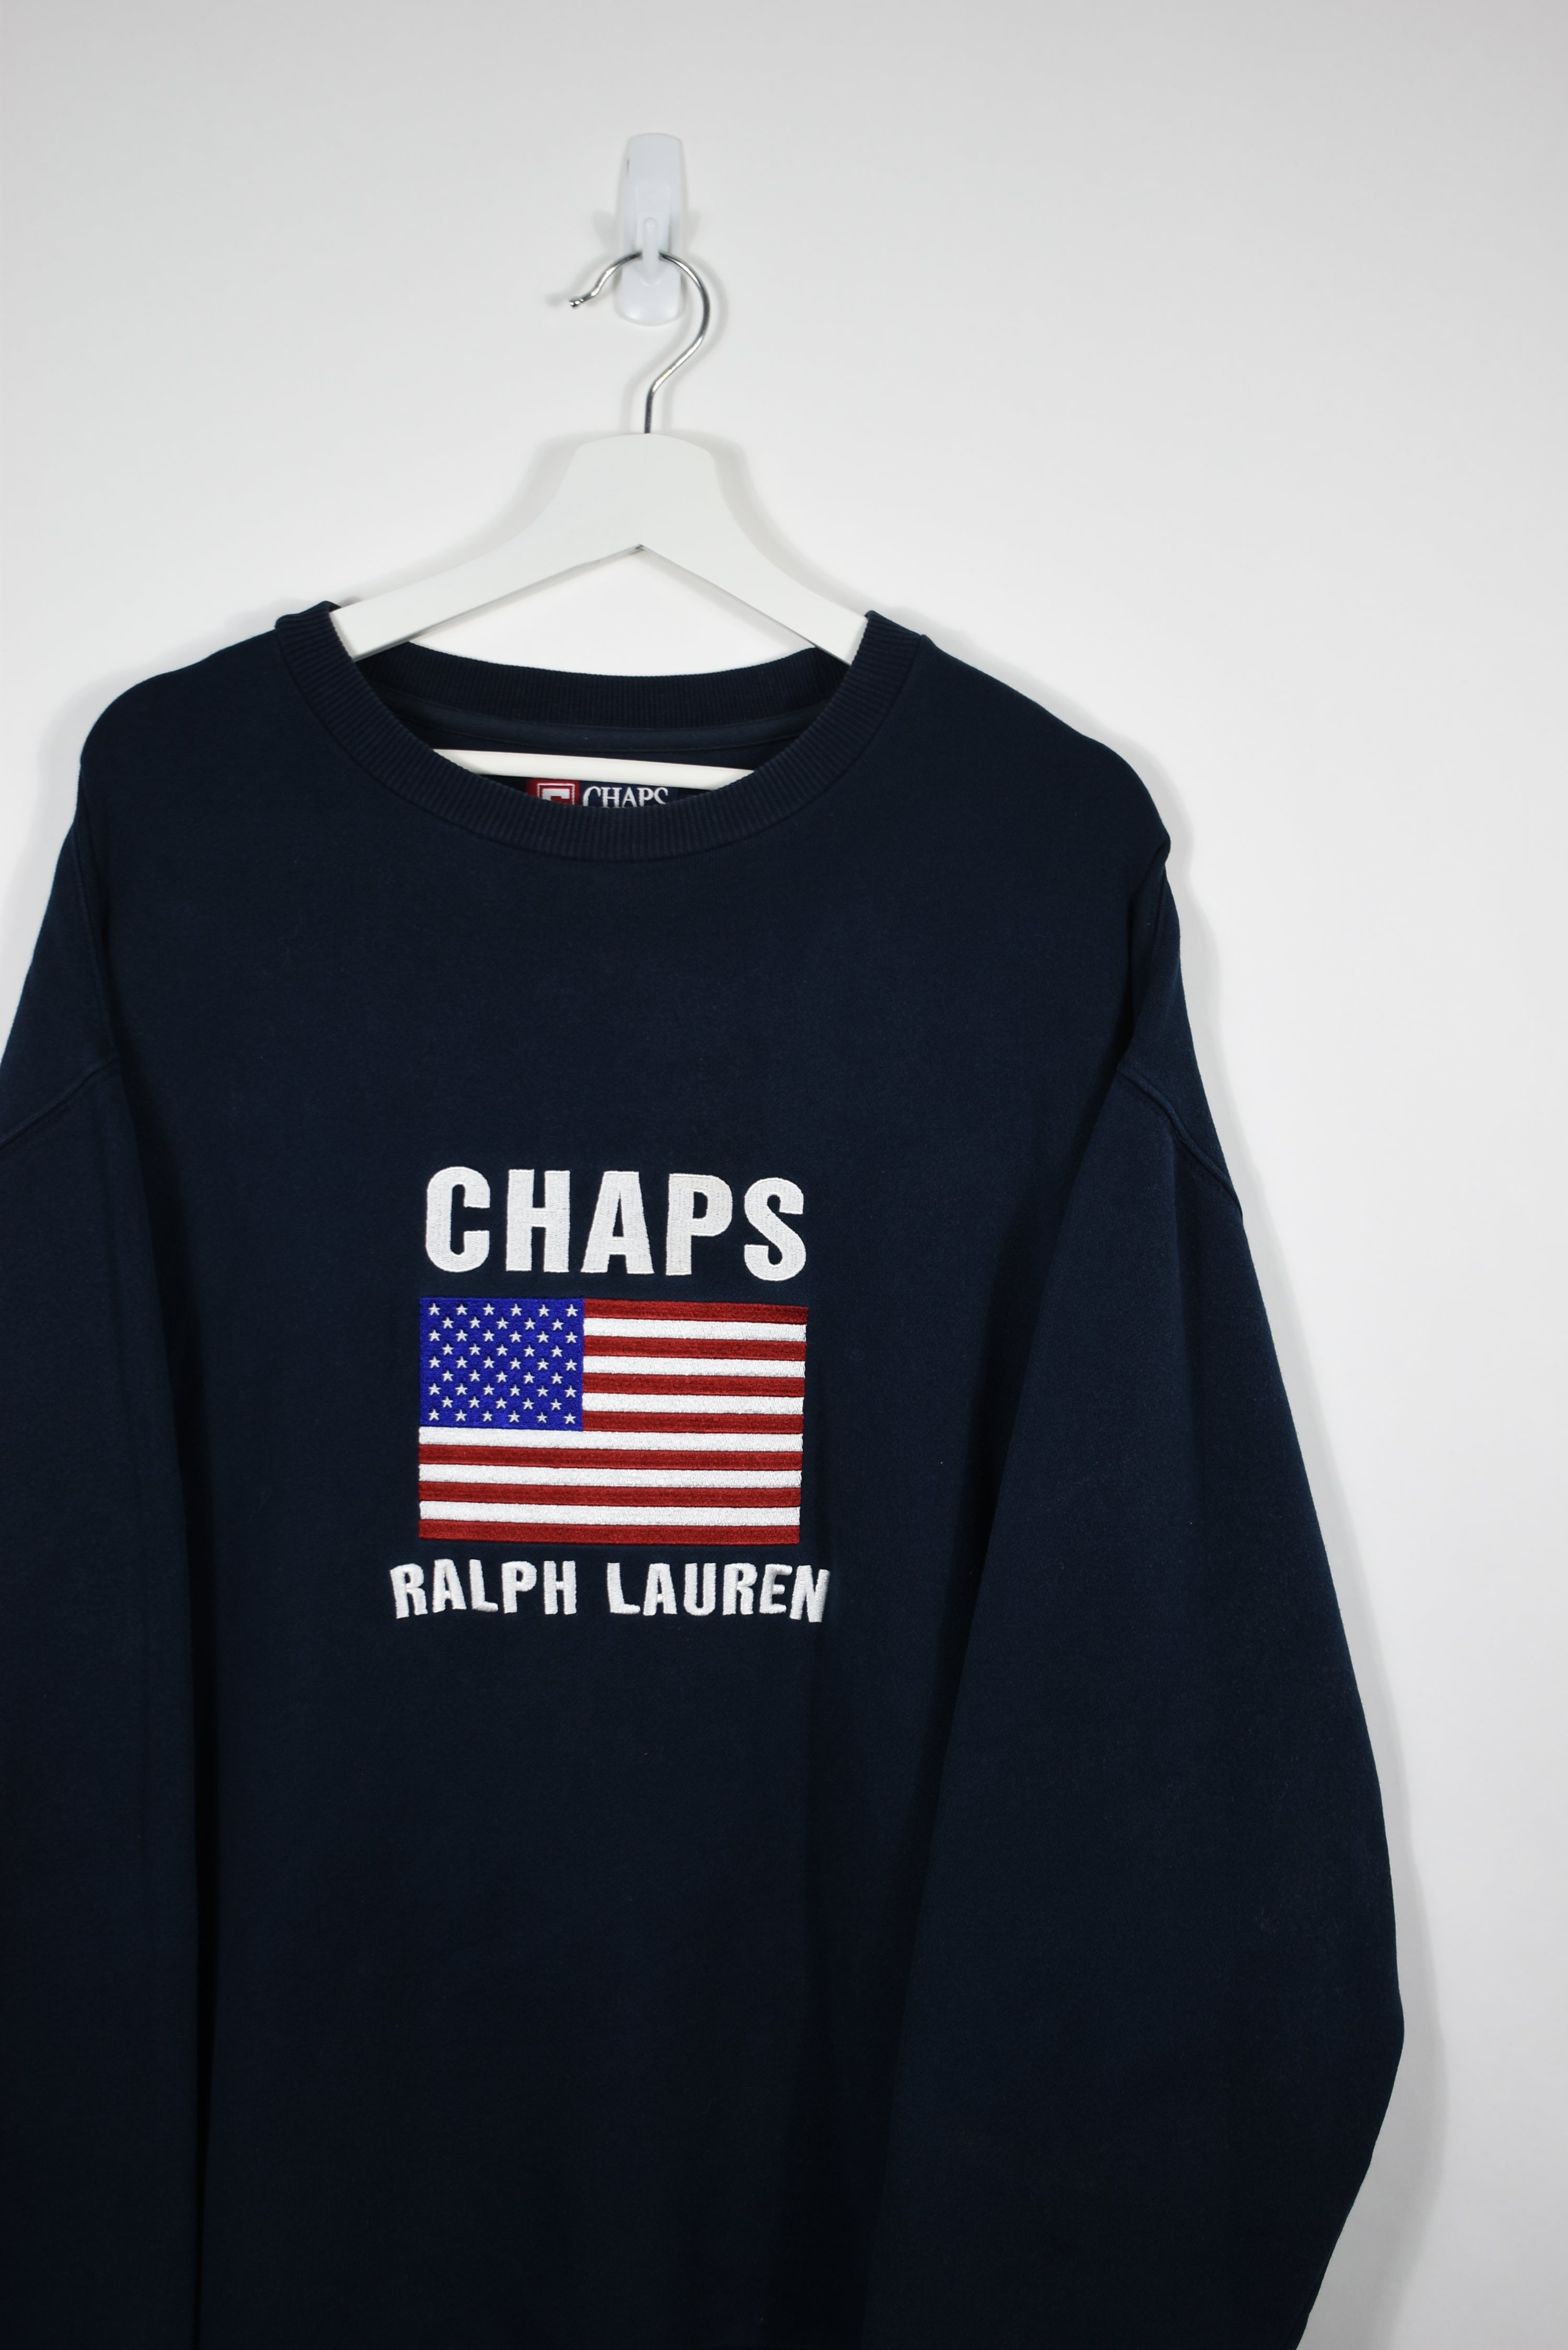 Vintage Chaps Ralph Lauren Embroidered Sweatshirt Xlarge